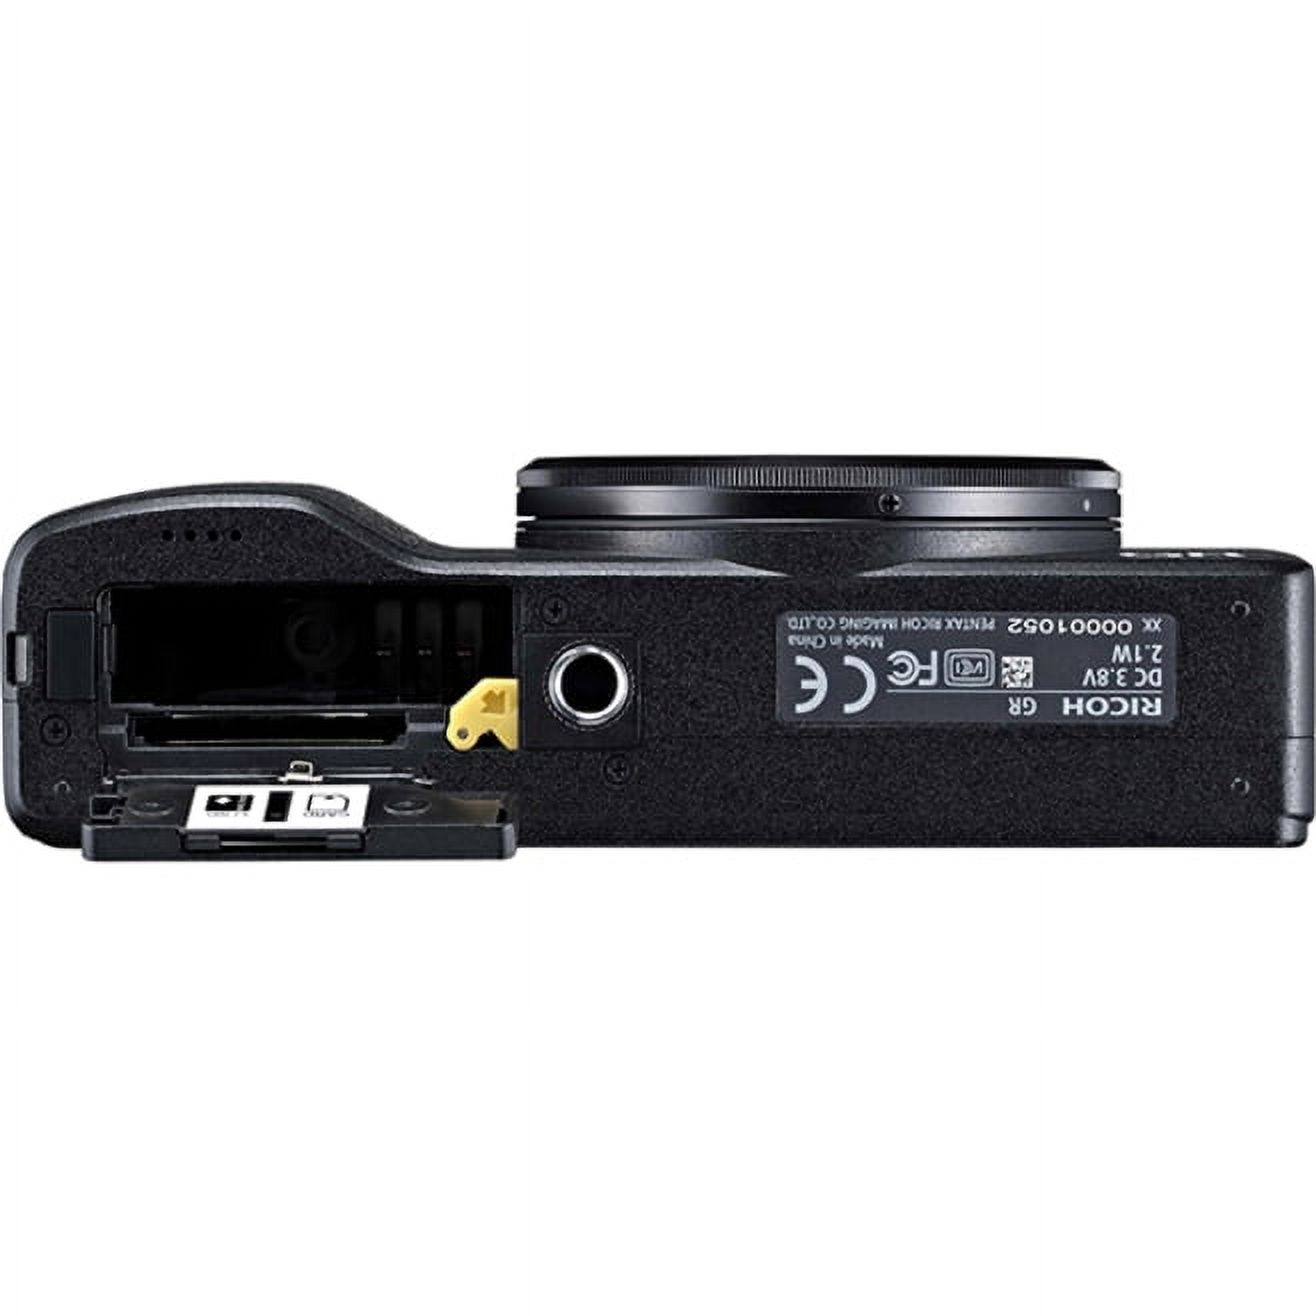 Ricoh GR 16.2 Megapixel Compact Camera, Black - image 2 of 6